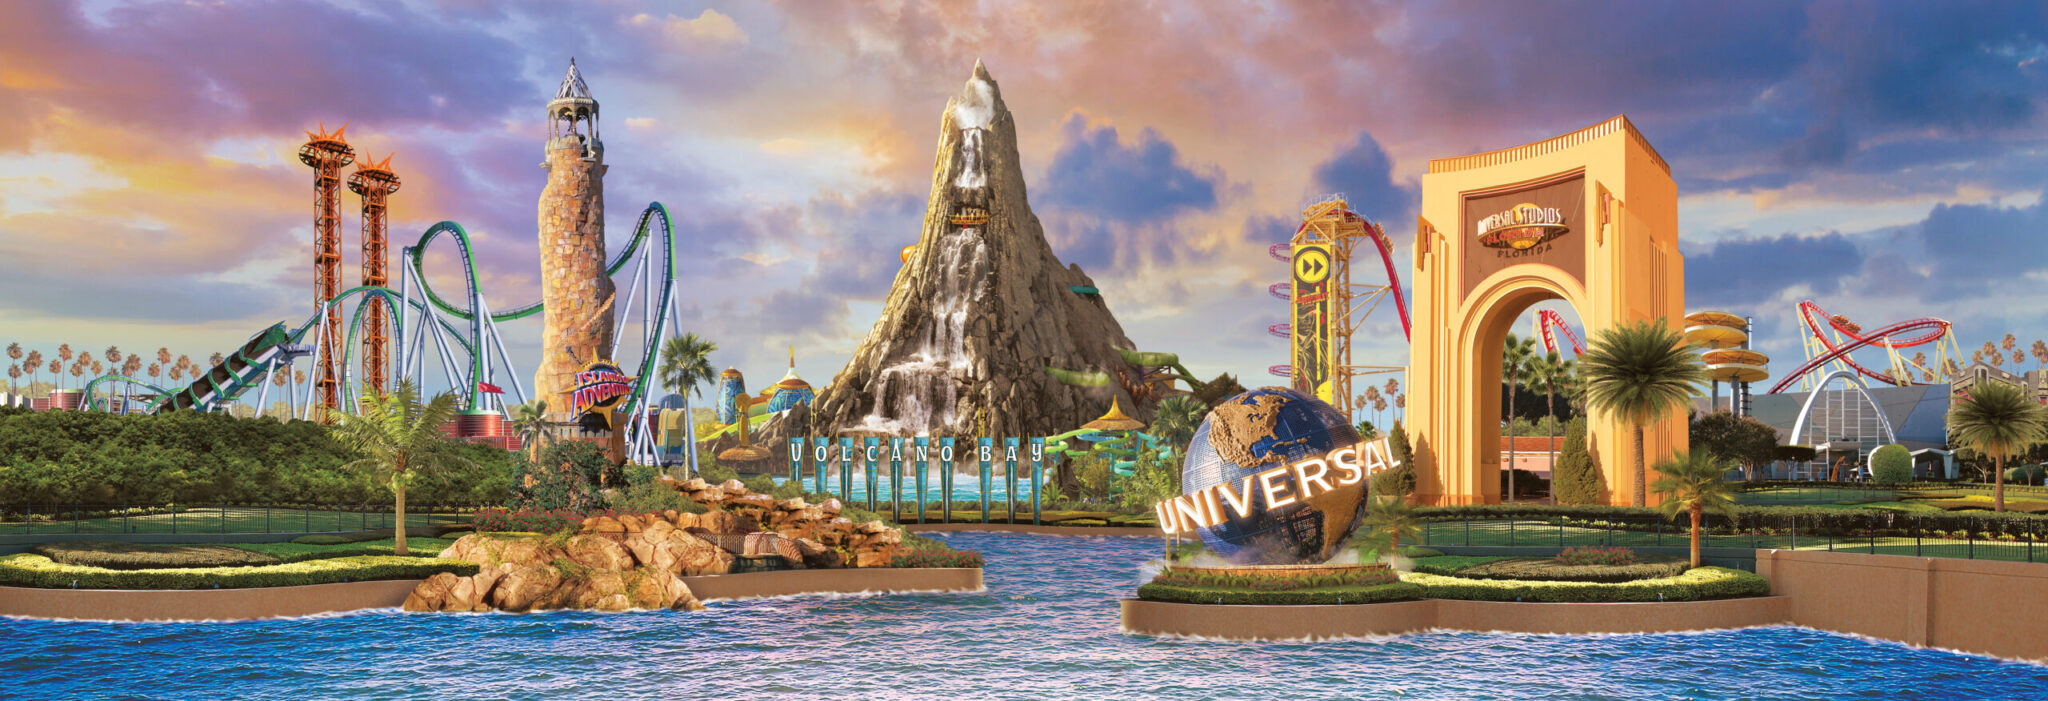 Universal Orlando Resort Destination Scope Image